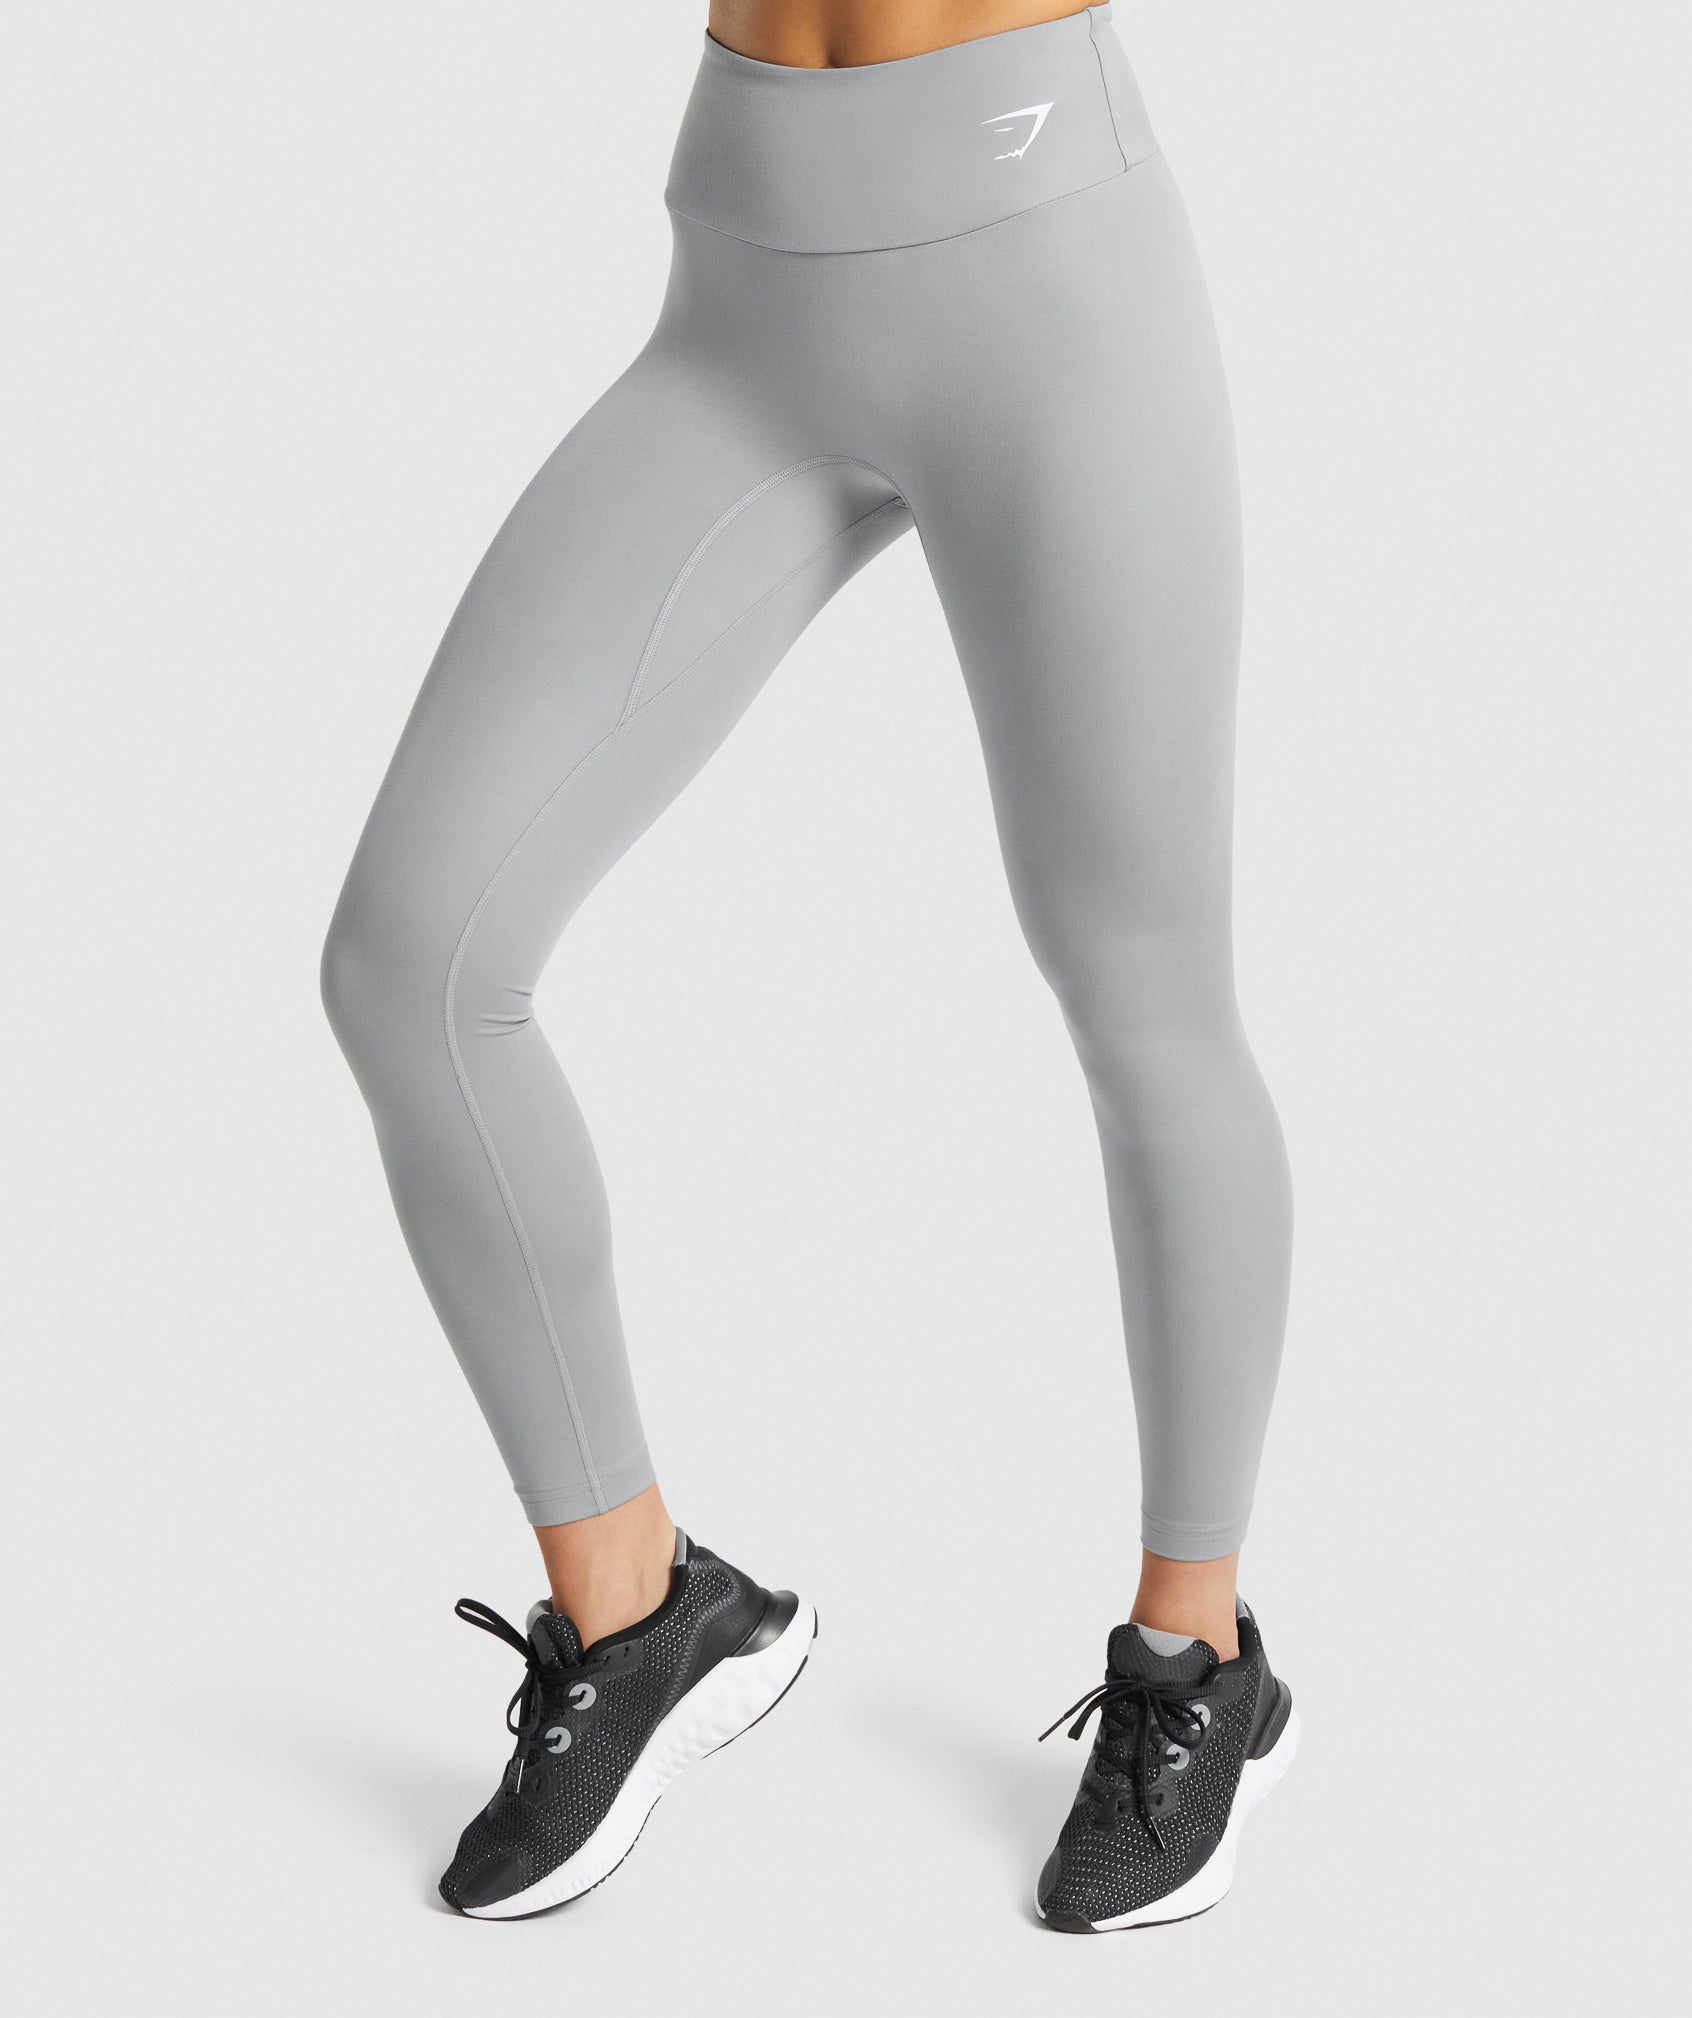 NWT Women's Tek Gear Shapewear Workout Gray High Leggings PM Medium Short  Grey 